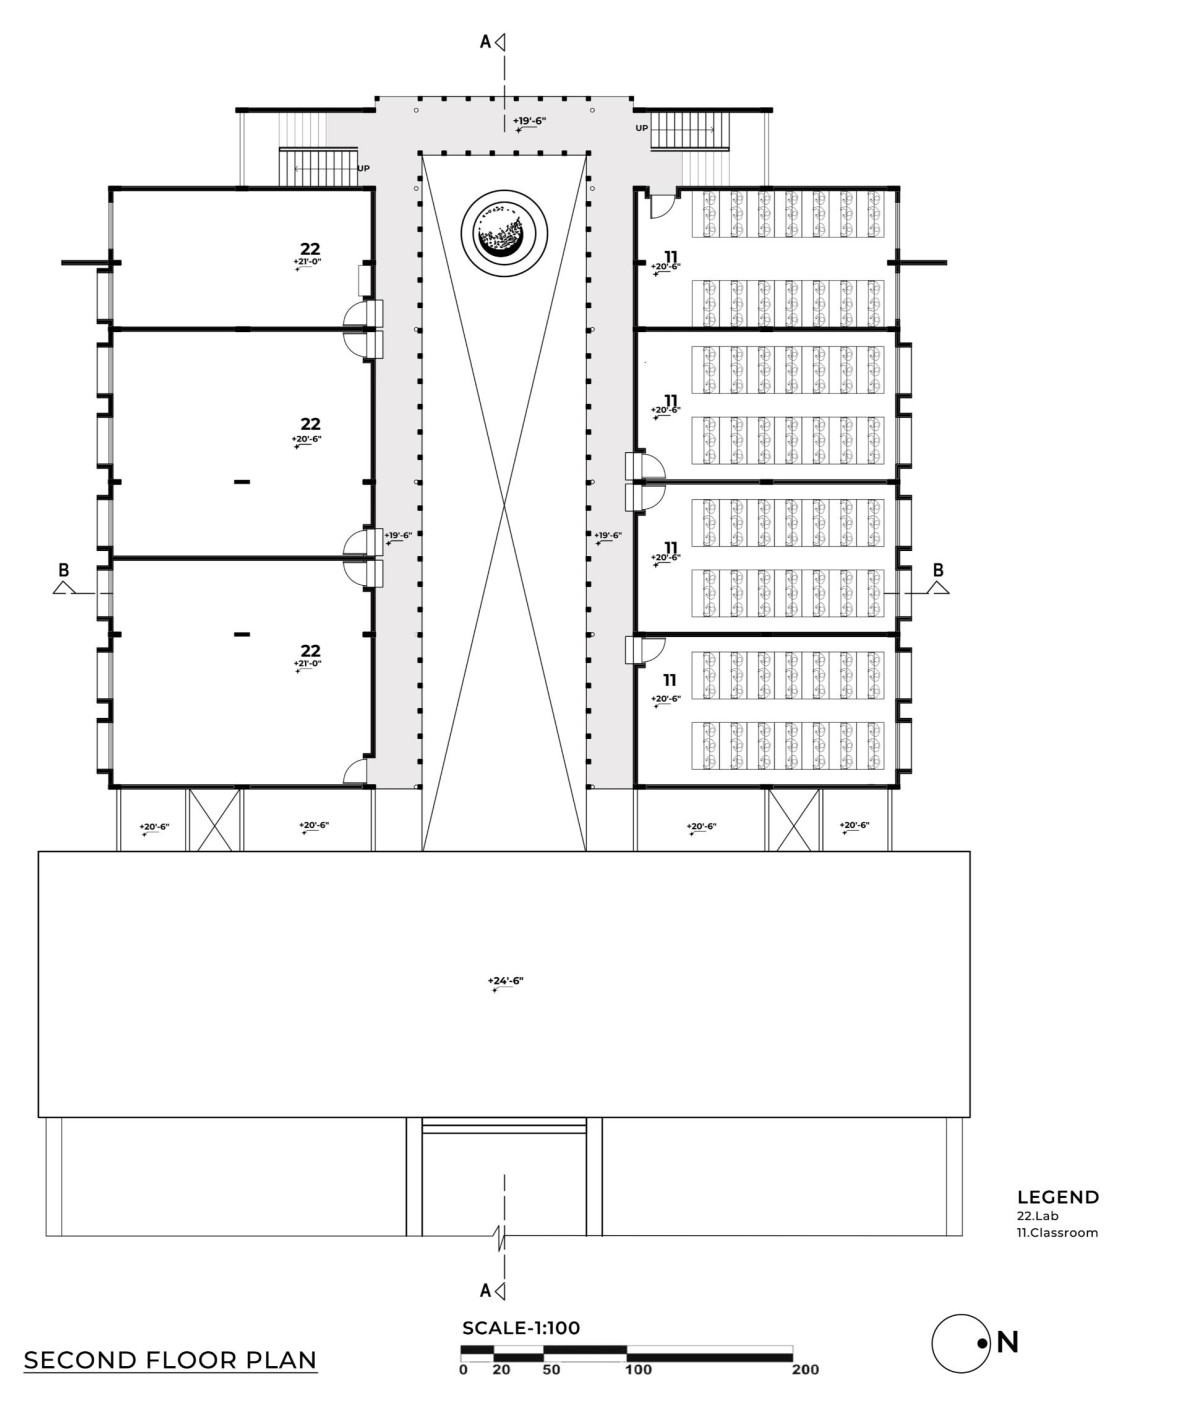 Second Floor Plan of Vidyakula International School by Sudaiva Studio